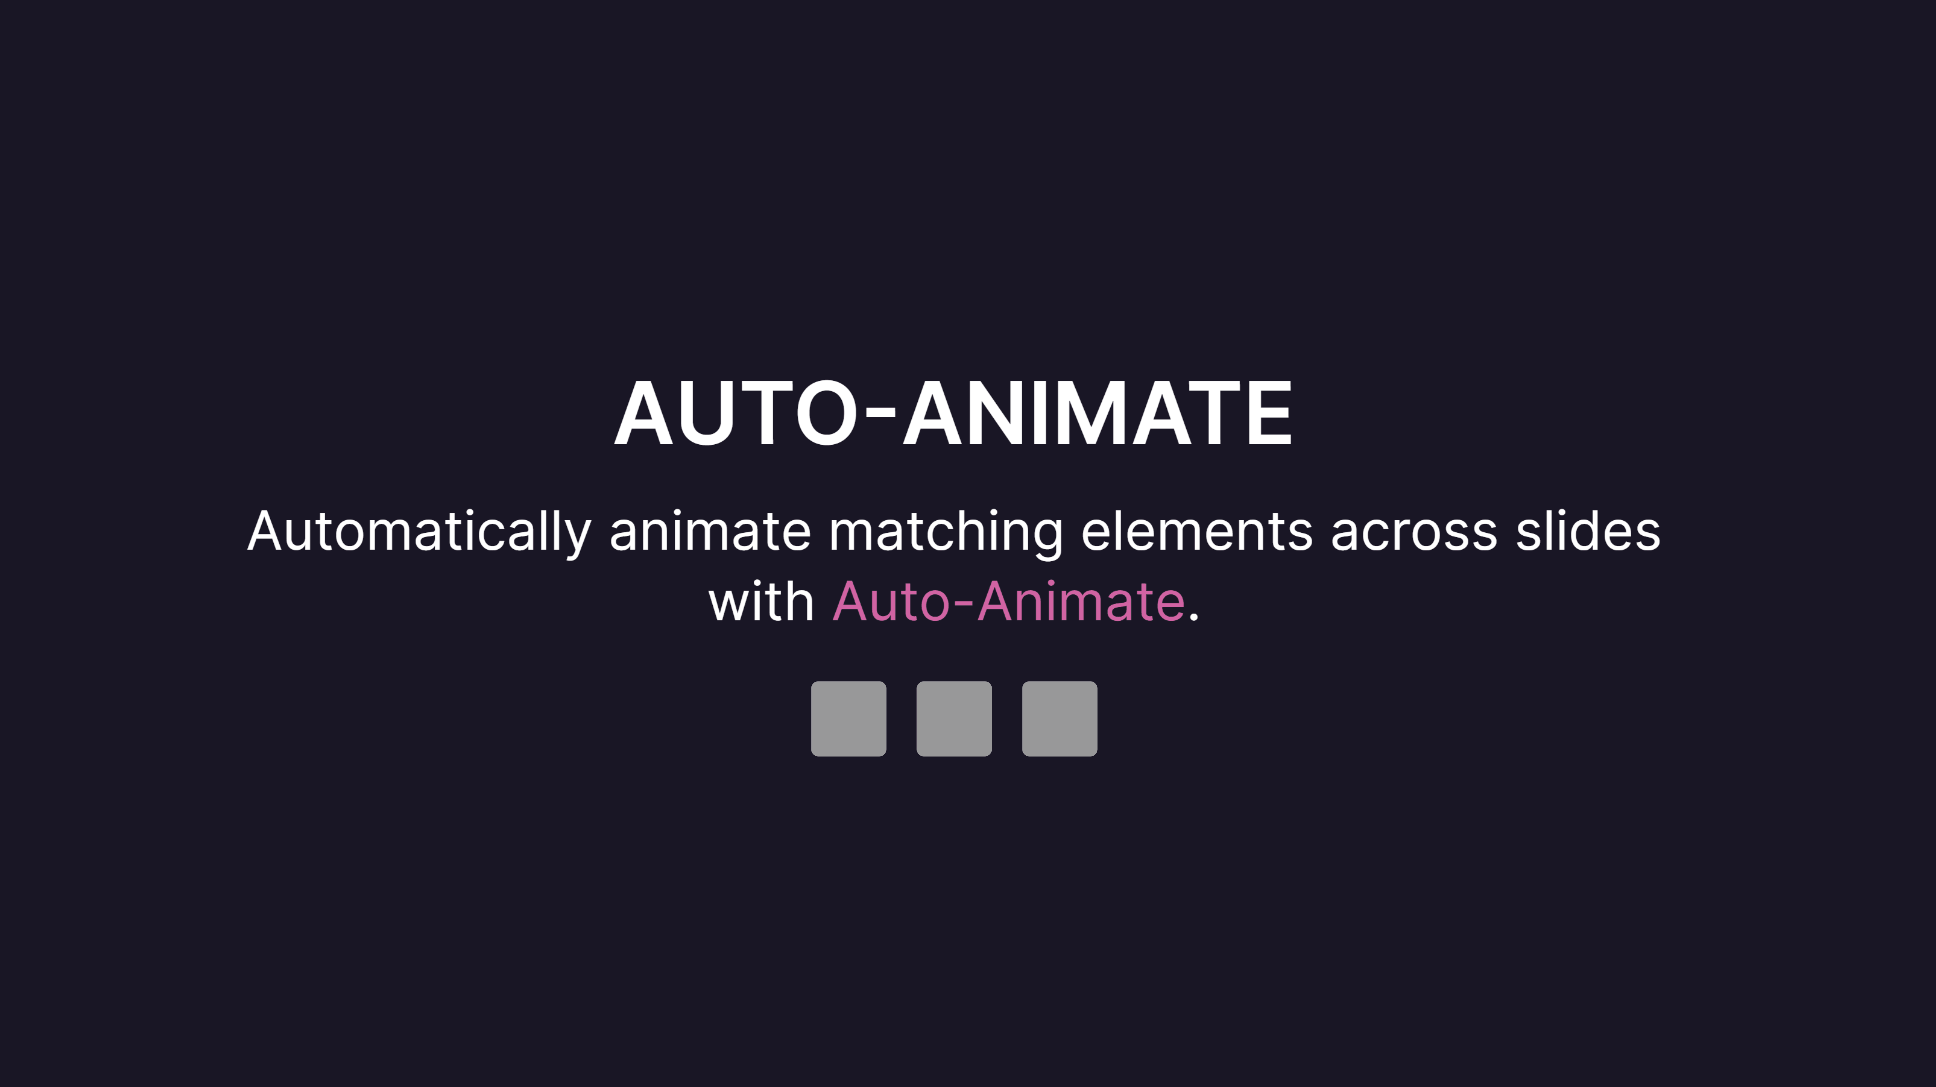 Slide animations